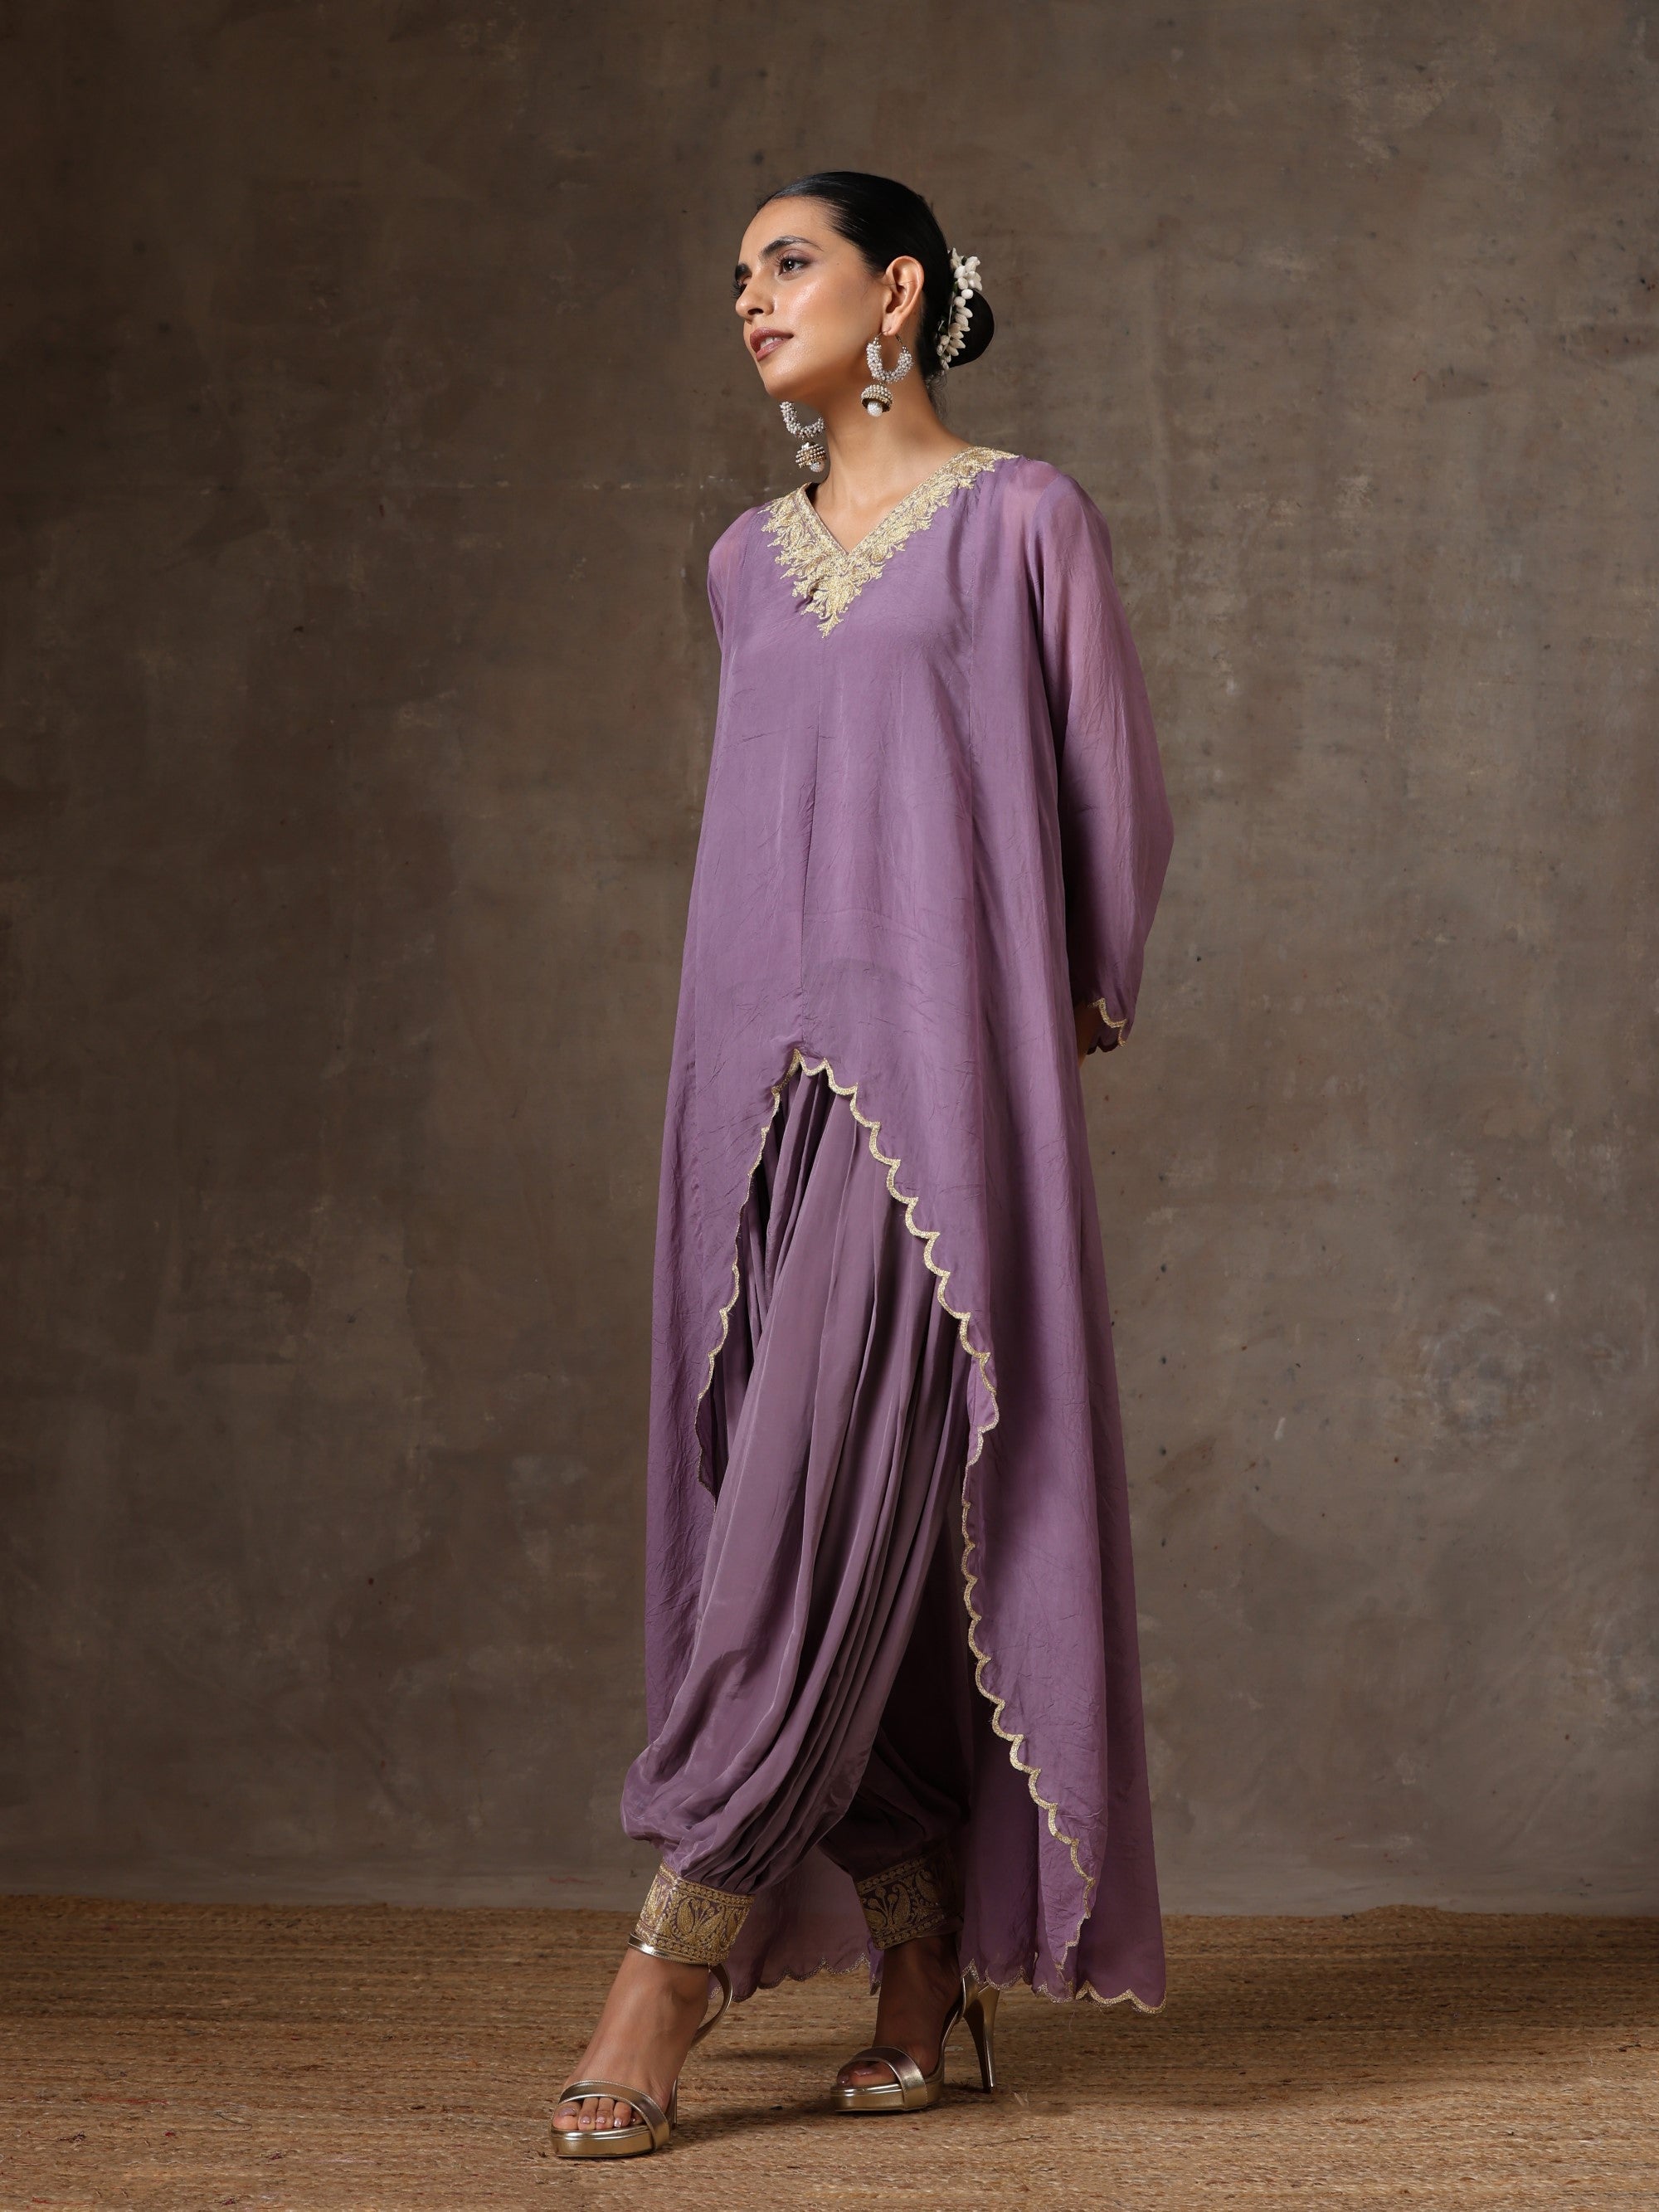 Afghani shalwar suit Design||Afghan Dress Design||Afghani shalwar Design||  - YouTube